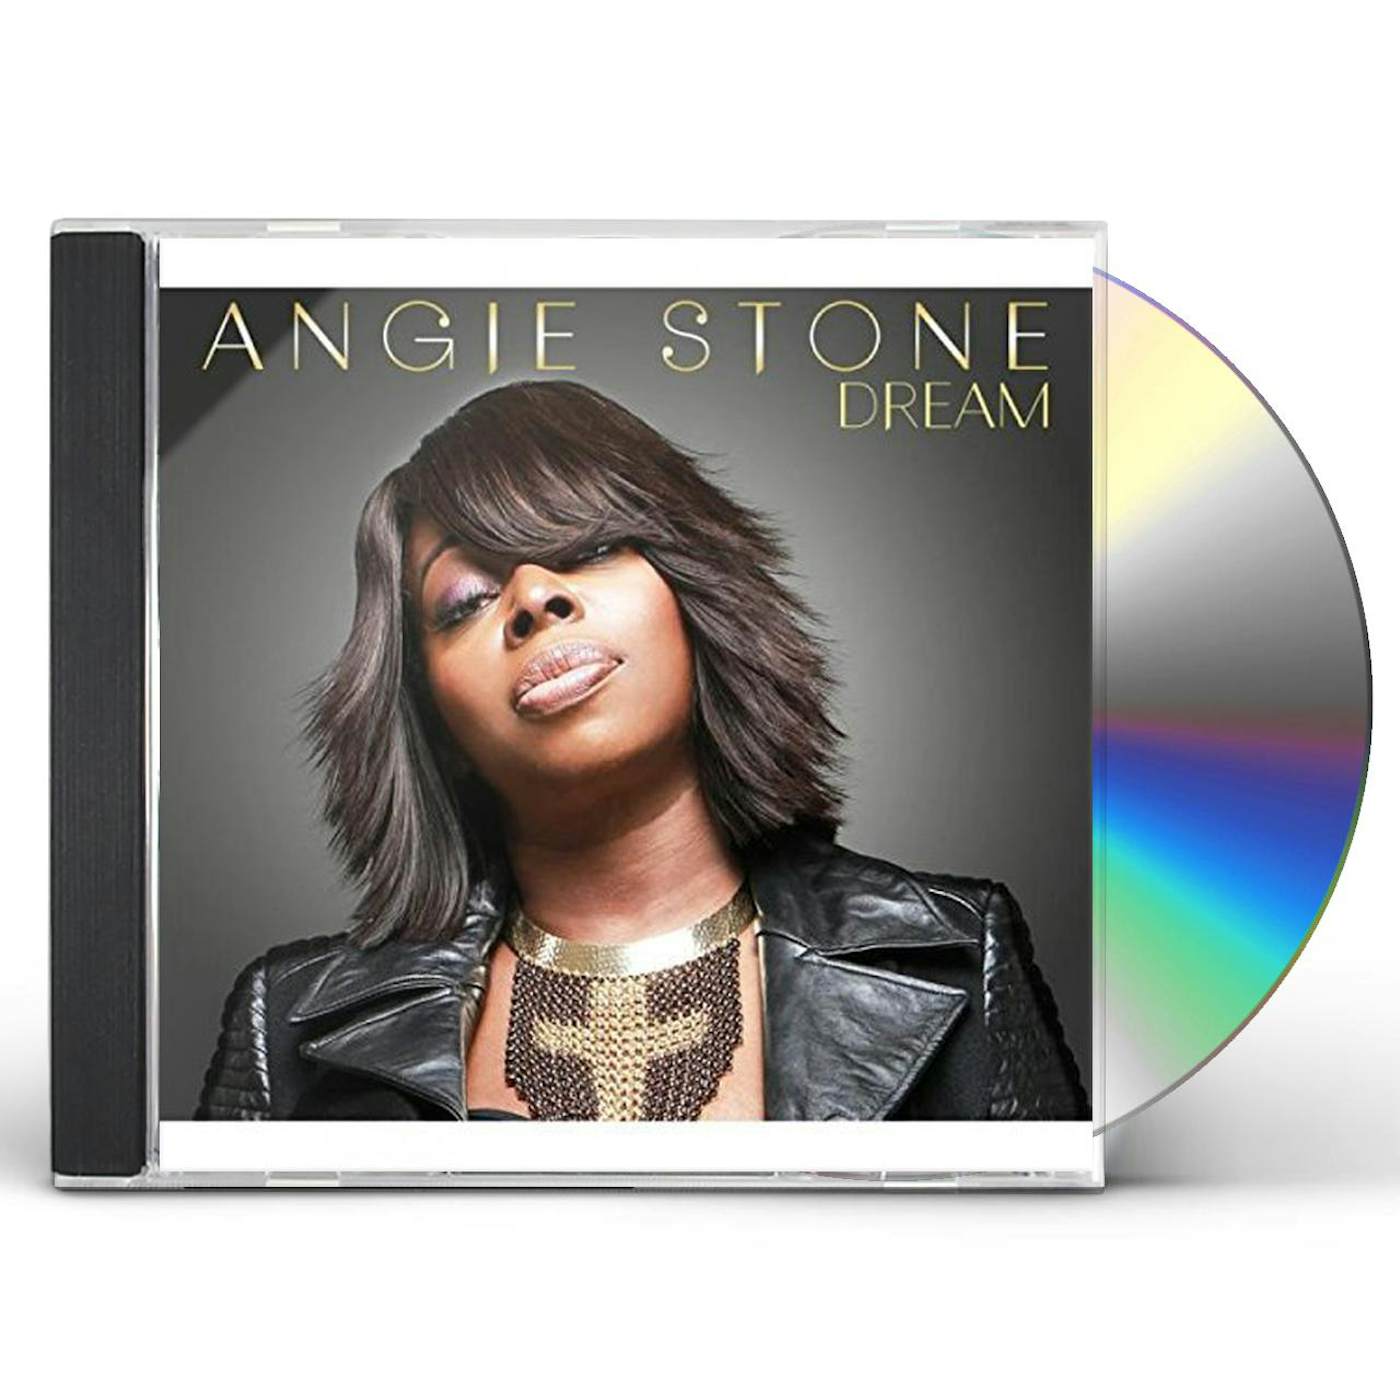 Angie Stone DREAM CD